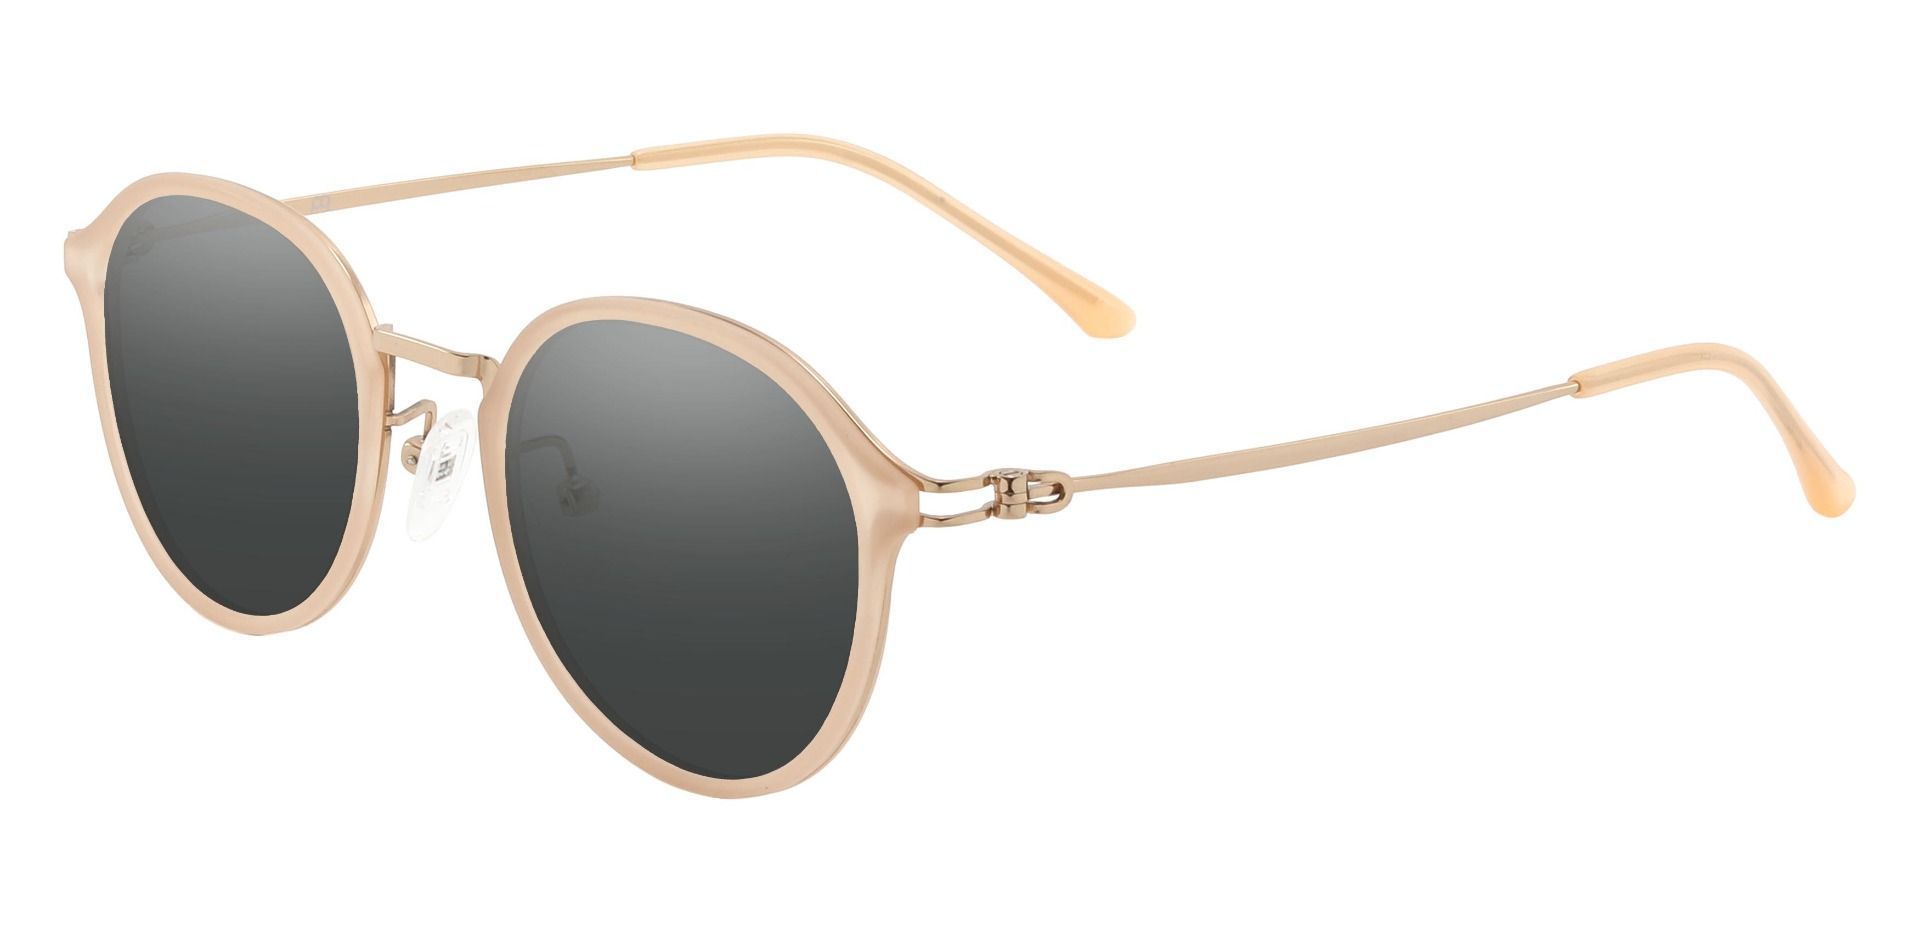 Billings Round Progressive Sunglasses - Brown Frame With Gray Lenses